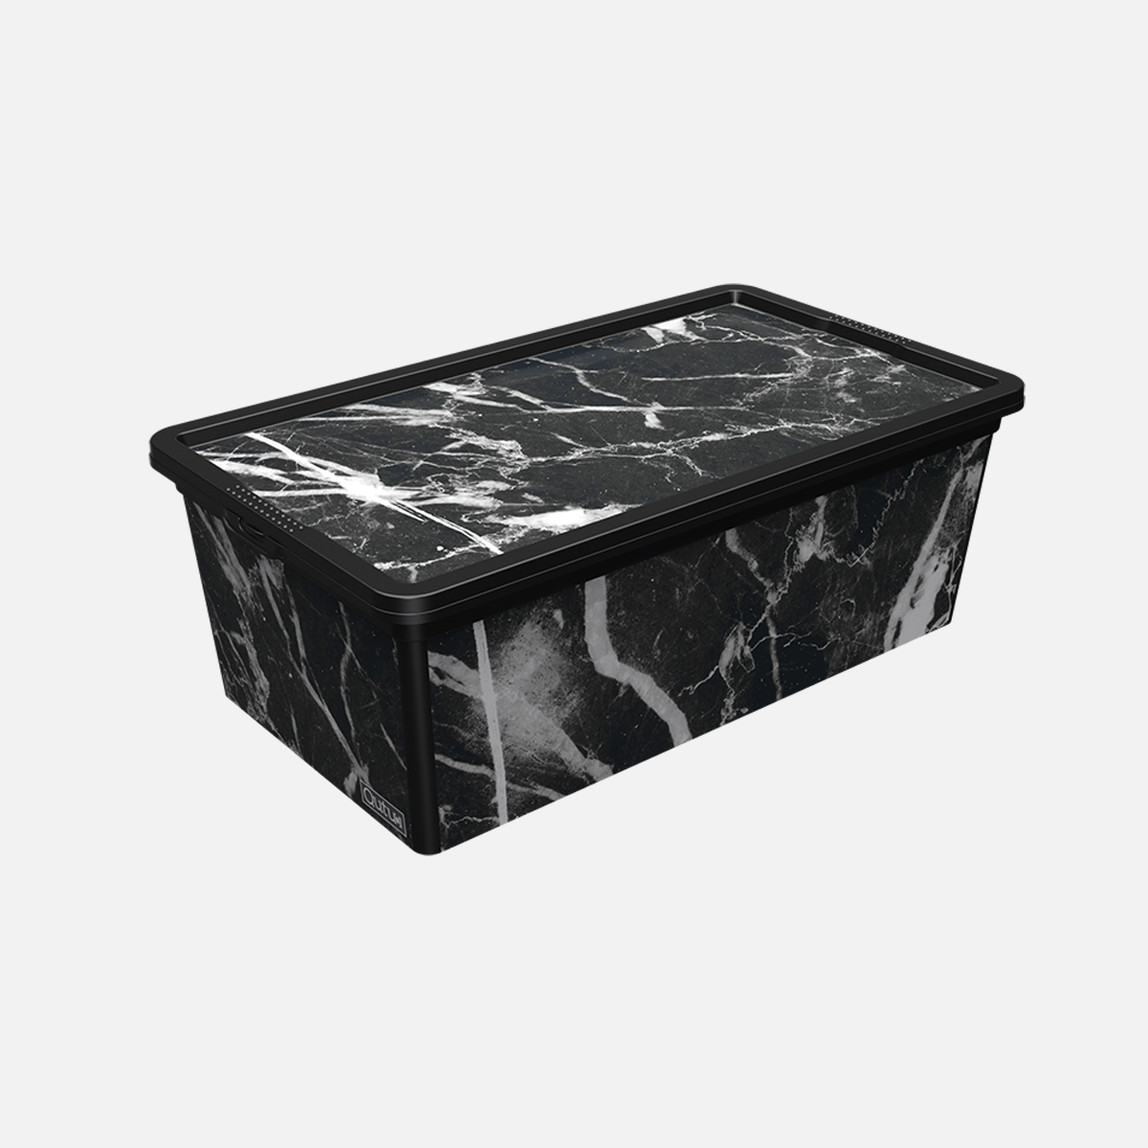    Qutu Trend Box Black Marble  